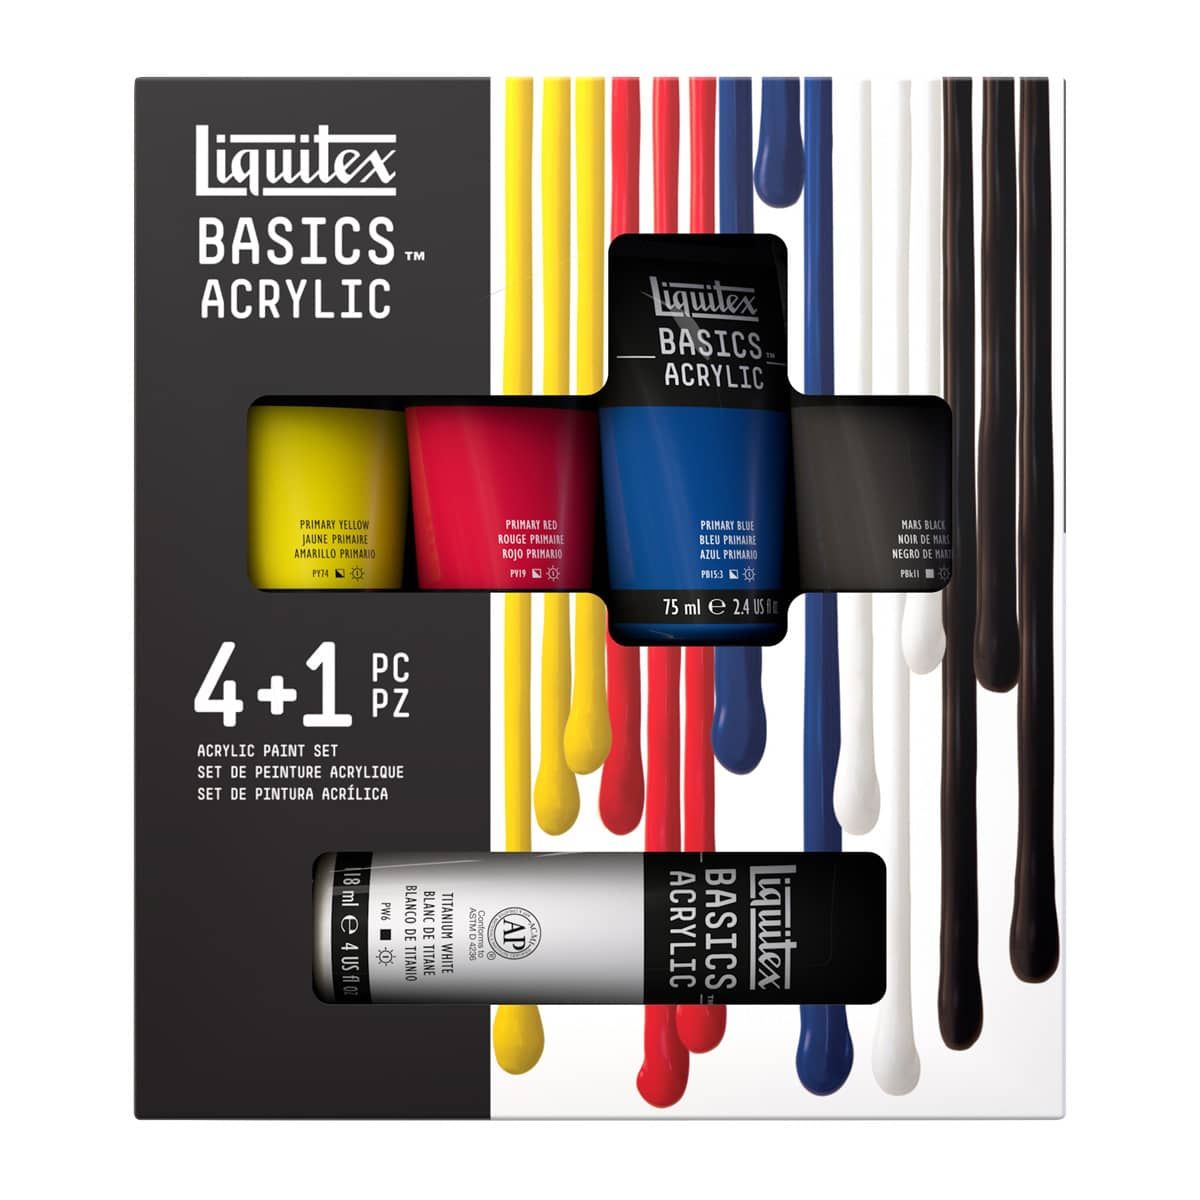 Liquitex BASICS Fluorescent Set of 6 Acrylics, 22ml Tubes